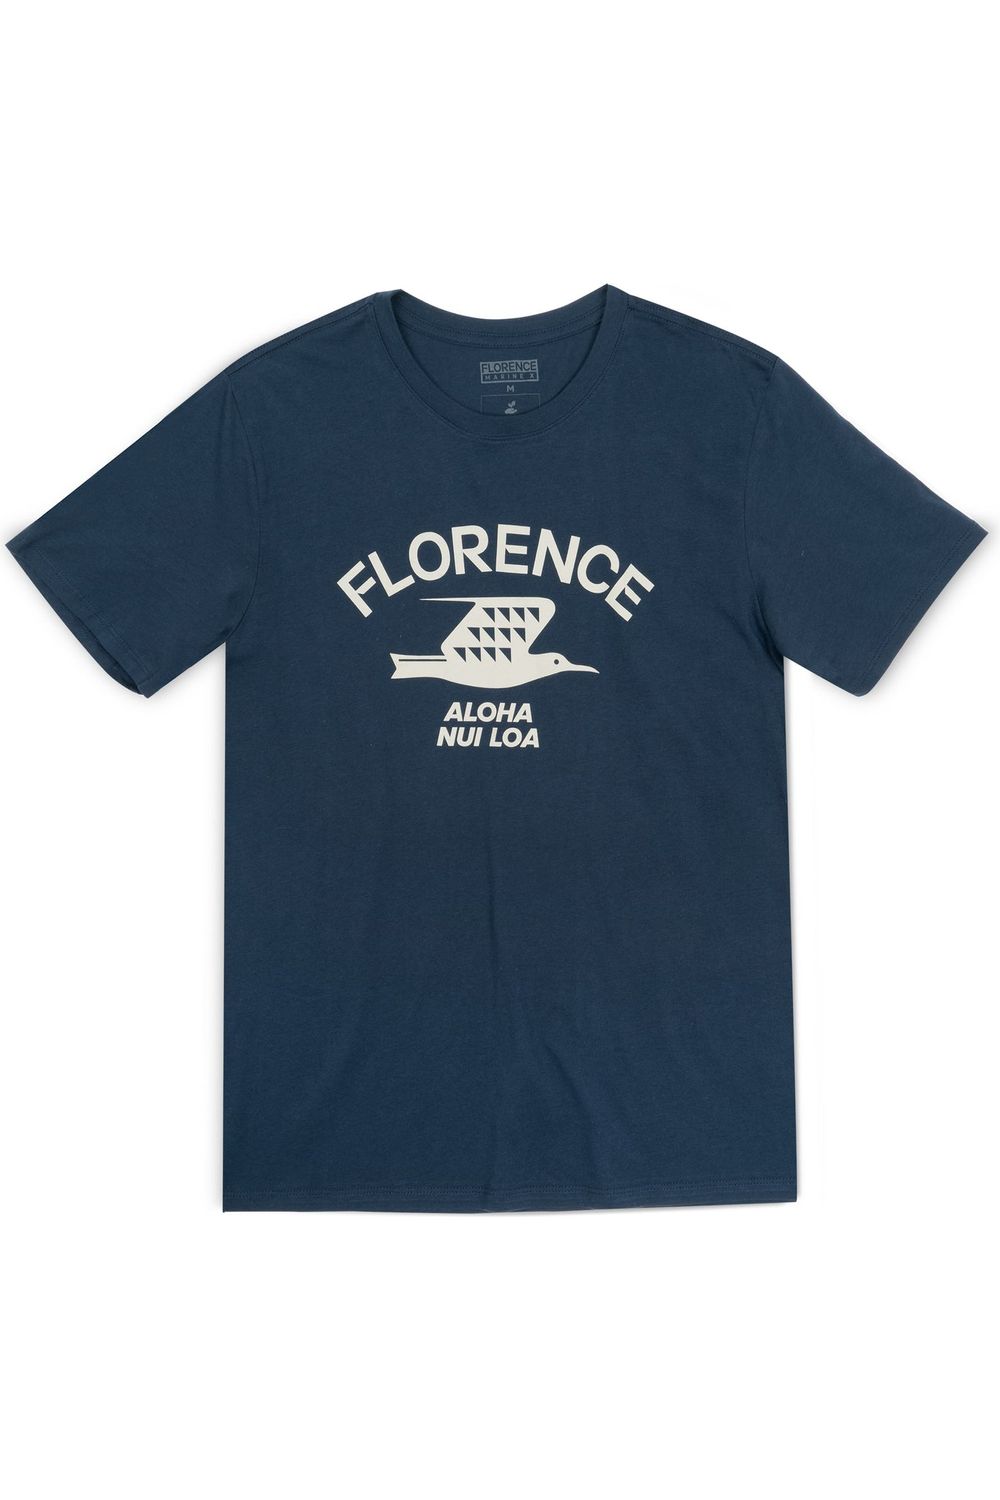 Florence Marine X IWA T-Shirt Navy